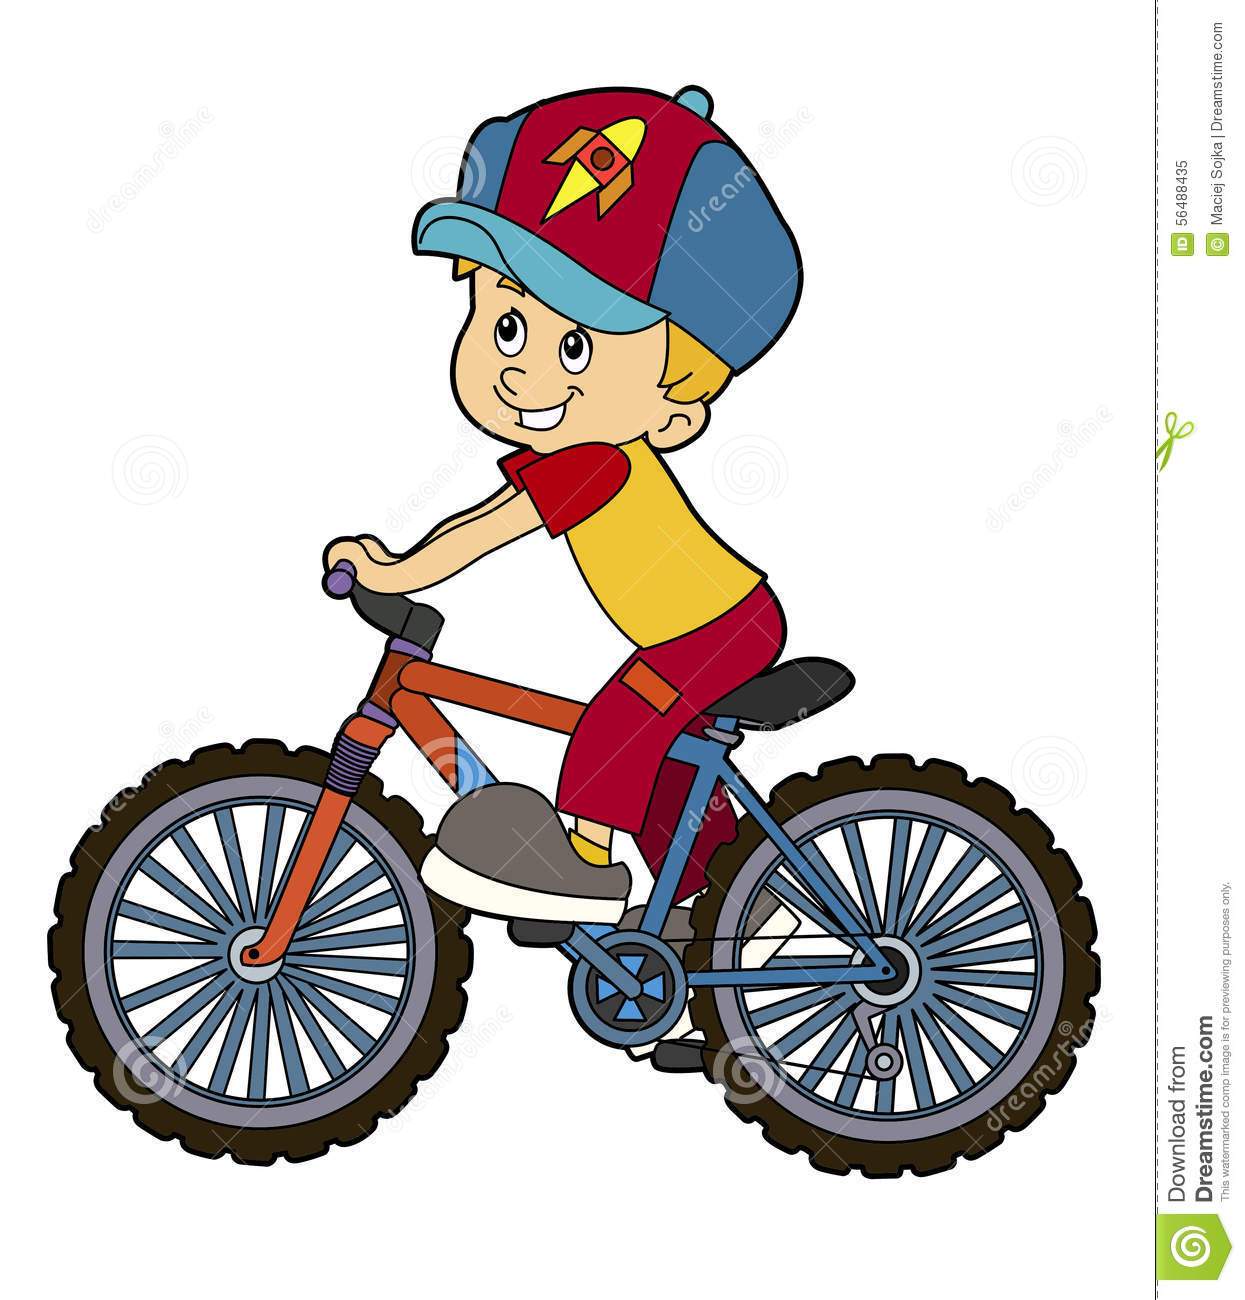 Kid riding bike clipart 2 » Clipart Portal.